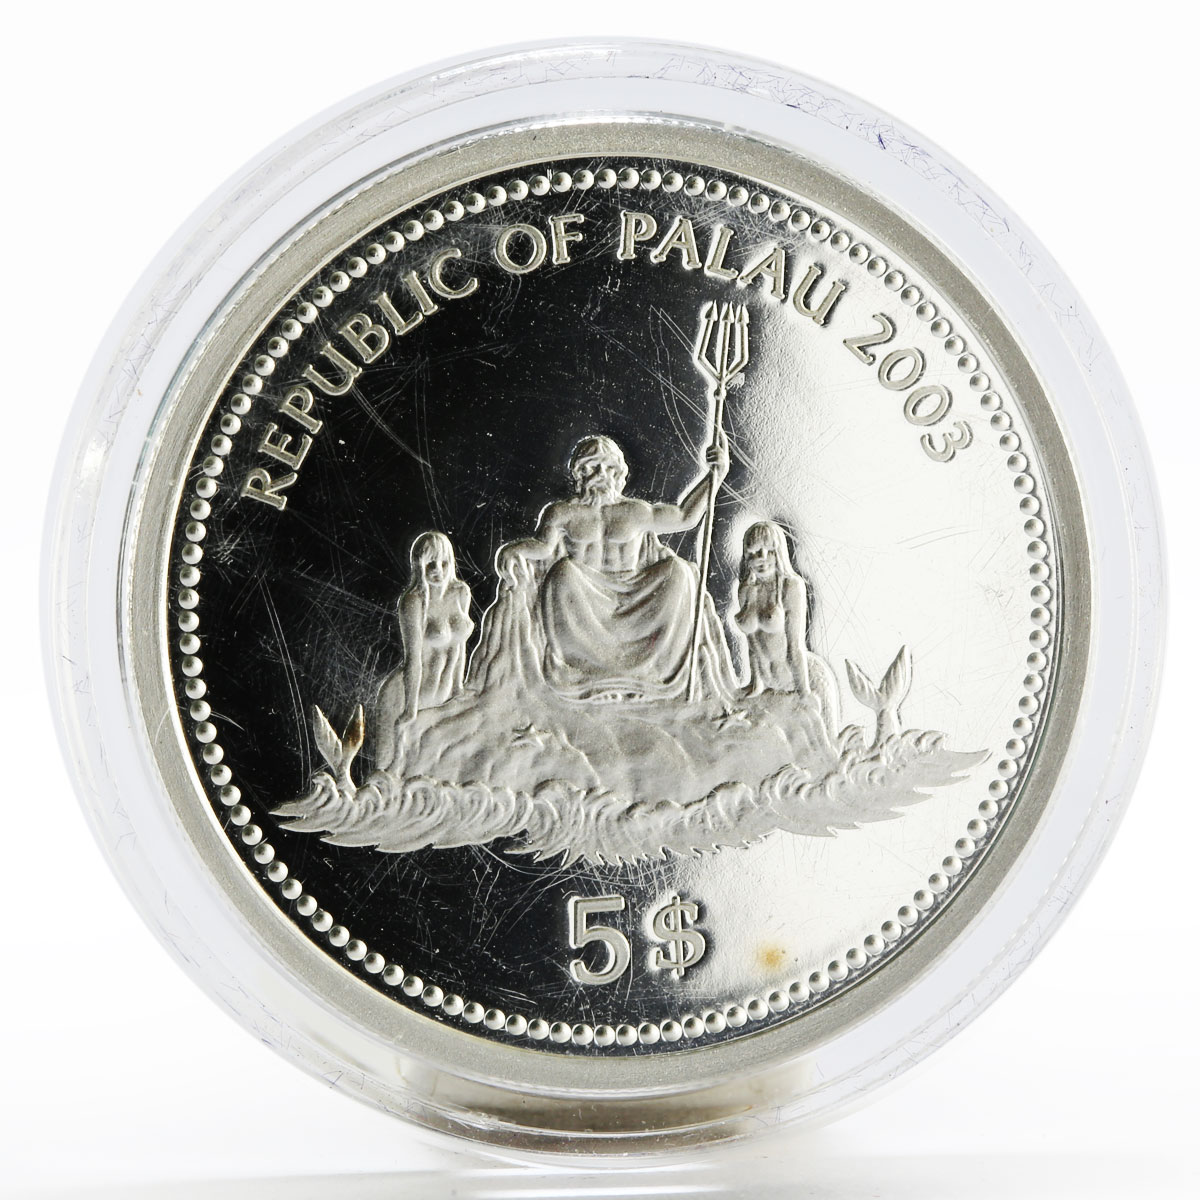 Palau 5 dollars Marine Life Protection series King Red Crab silver coin 2003